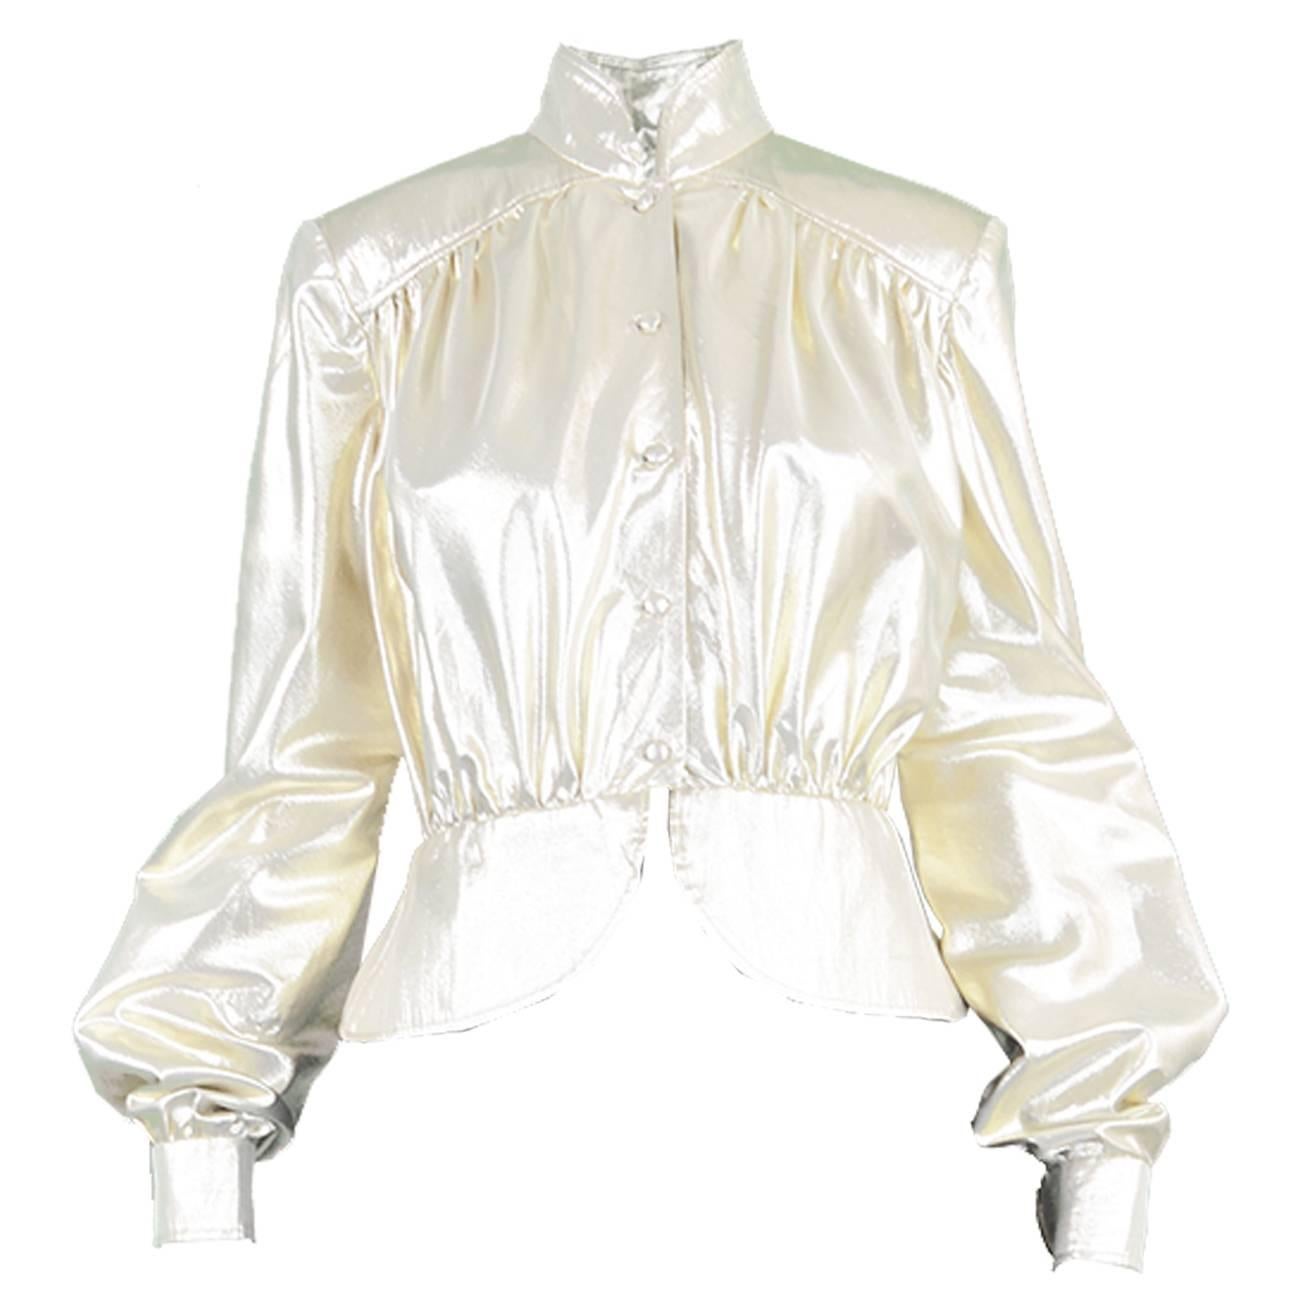 Yuki of London Metallic Pale Gold Lamé Jacket, 1970s For Sale